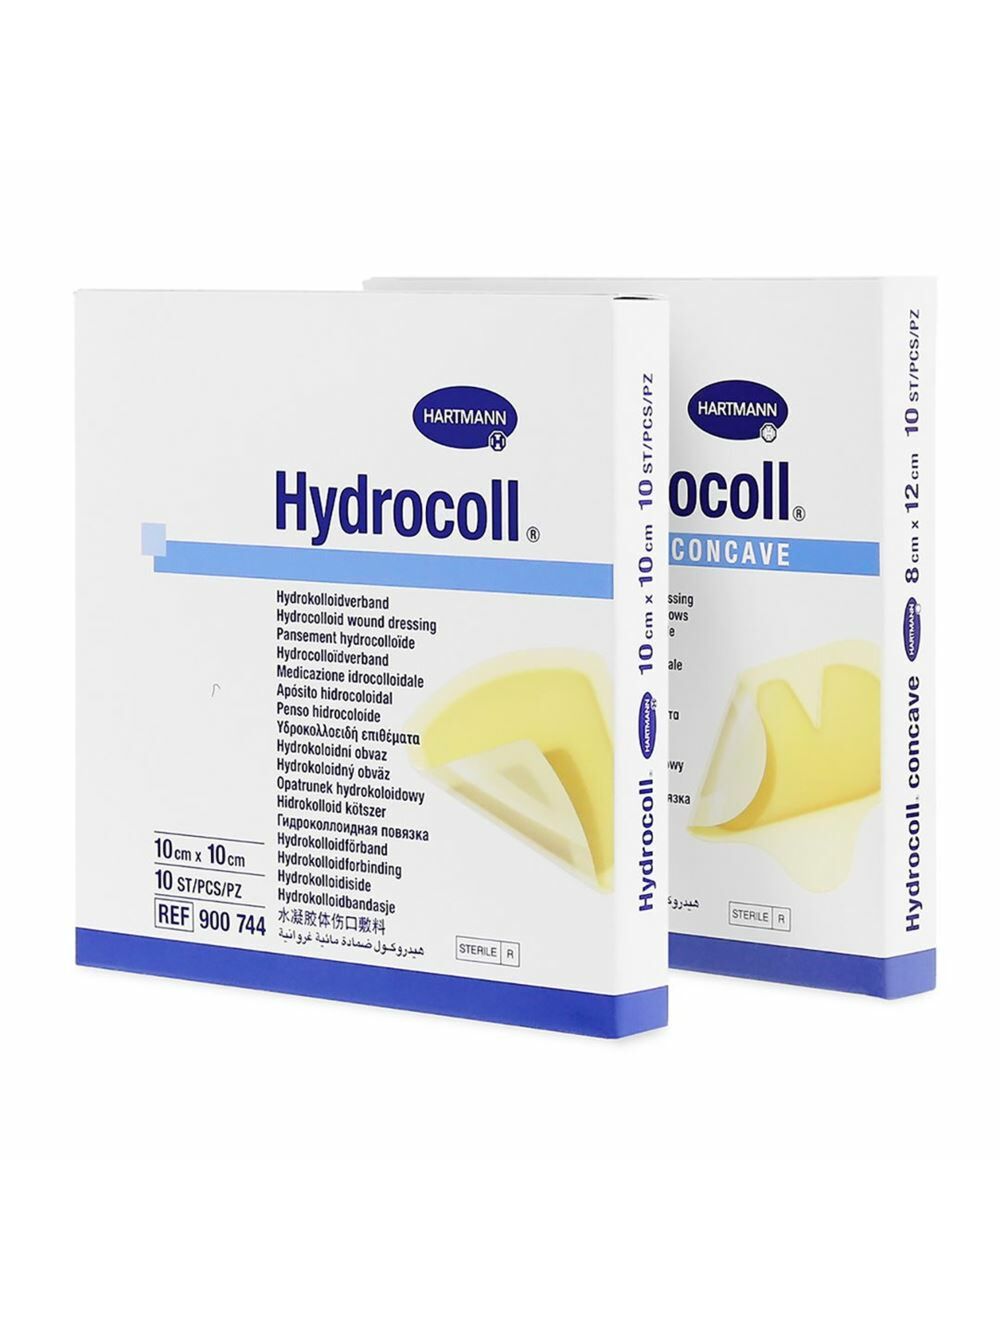 Hydrocoll Hydrocolloid Verband 8x12cm Concave 10 Stk acquistare online Coop